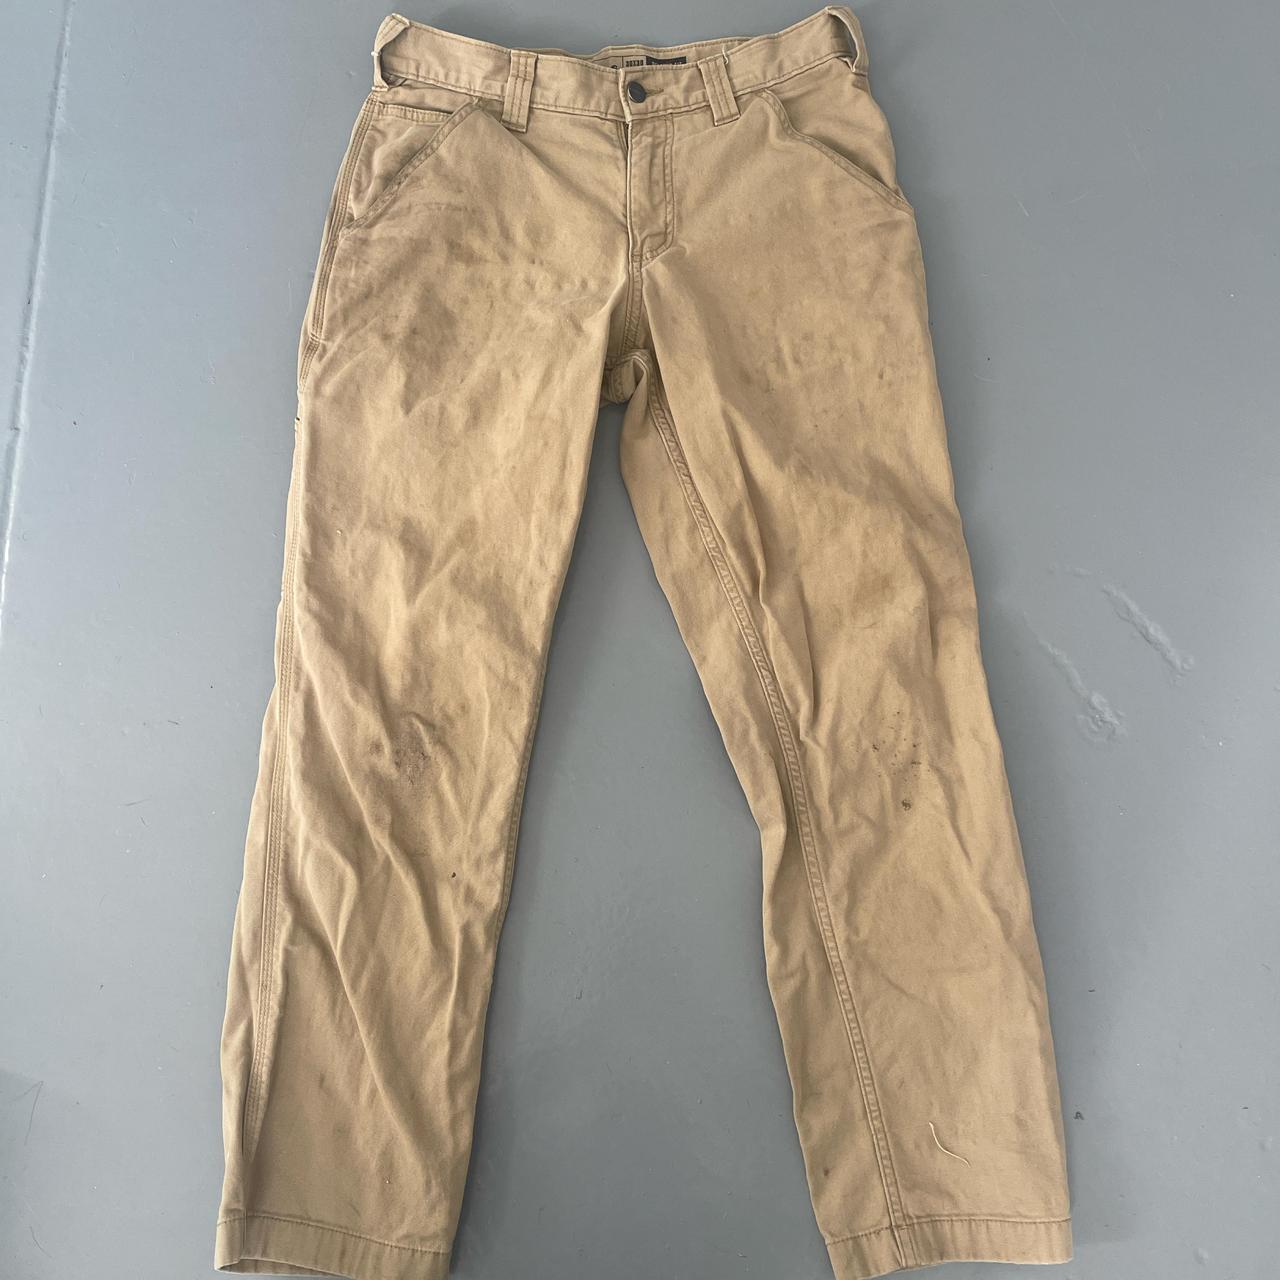 Carhartt Pants Size 30x30 Good Condition Minor... - Depop